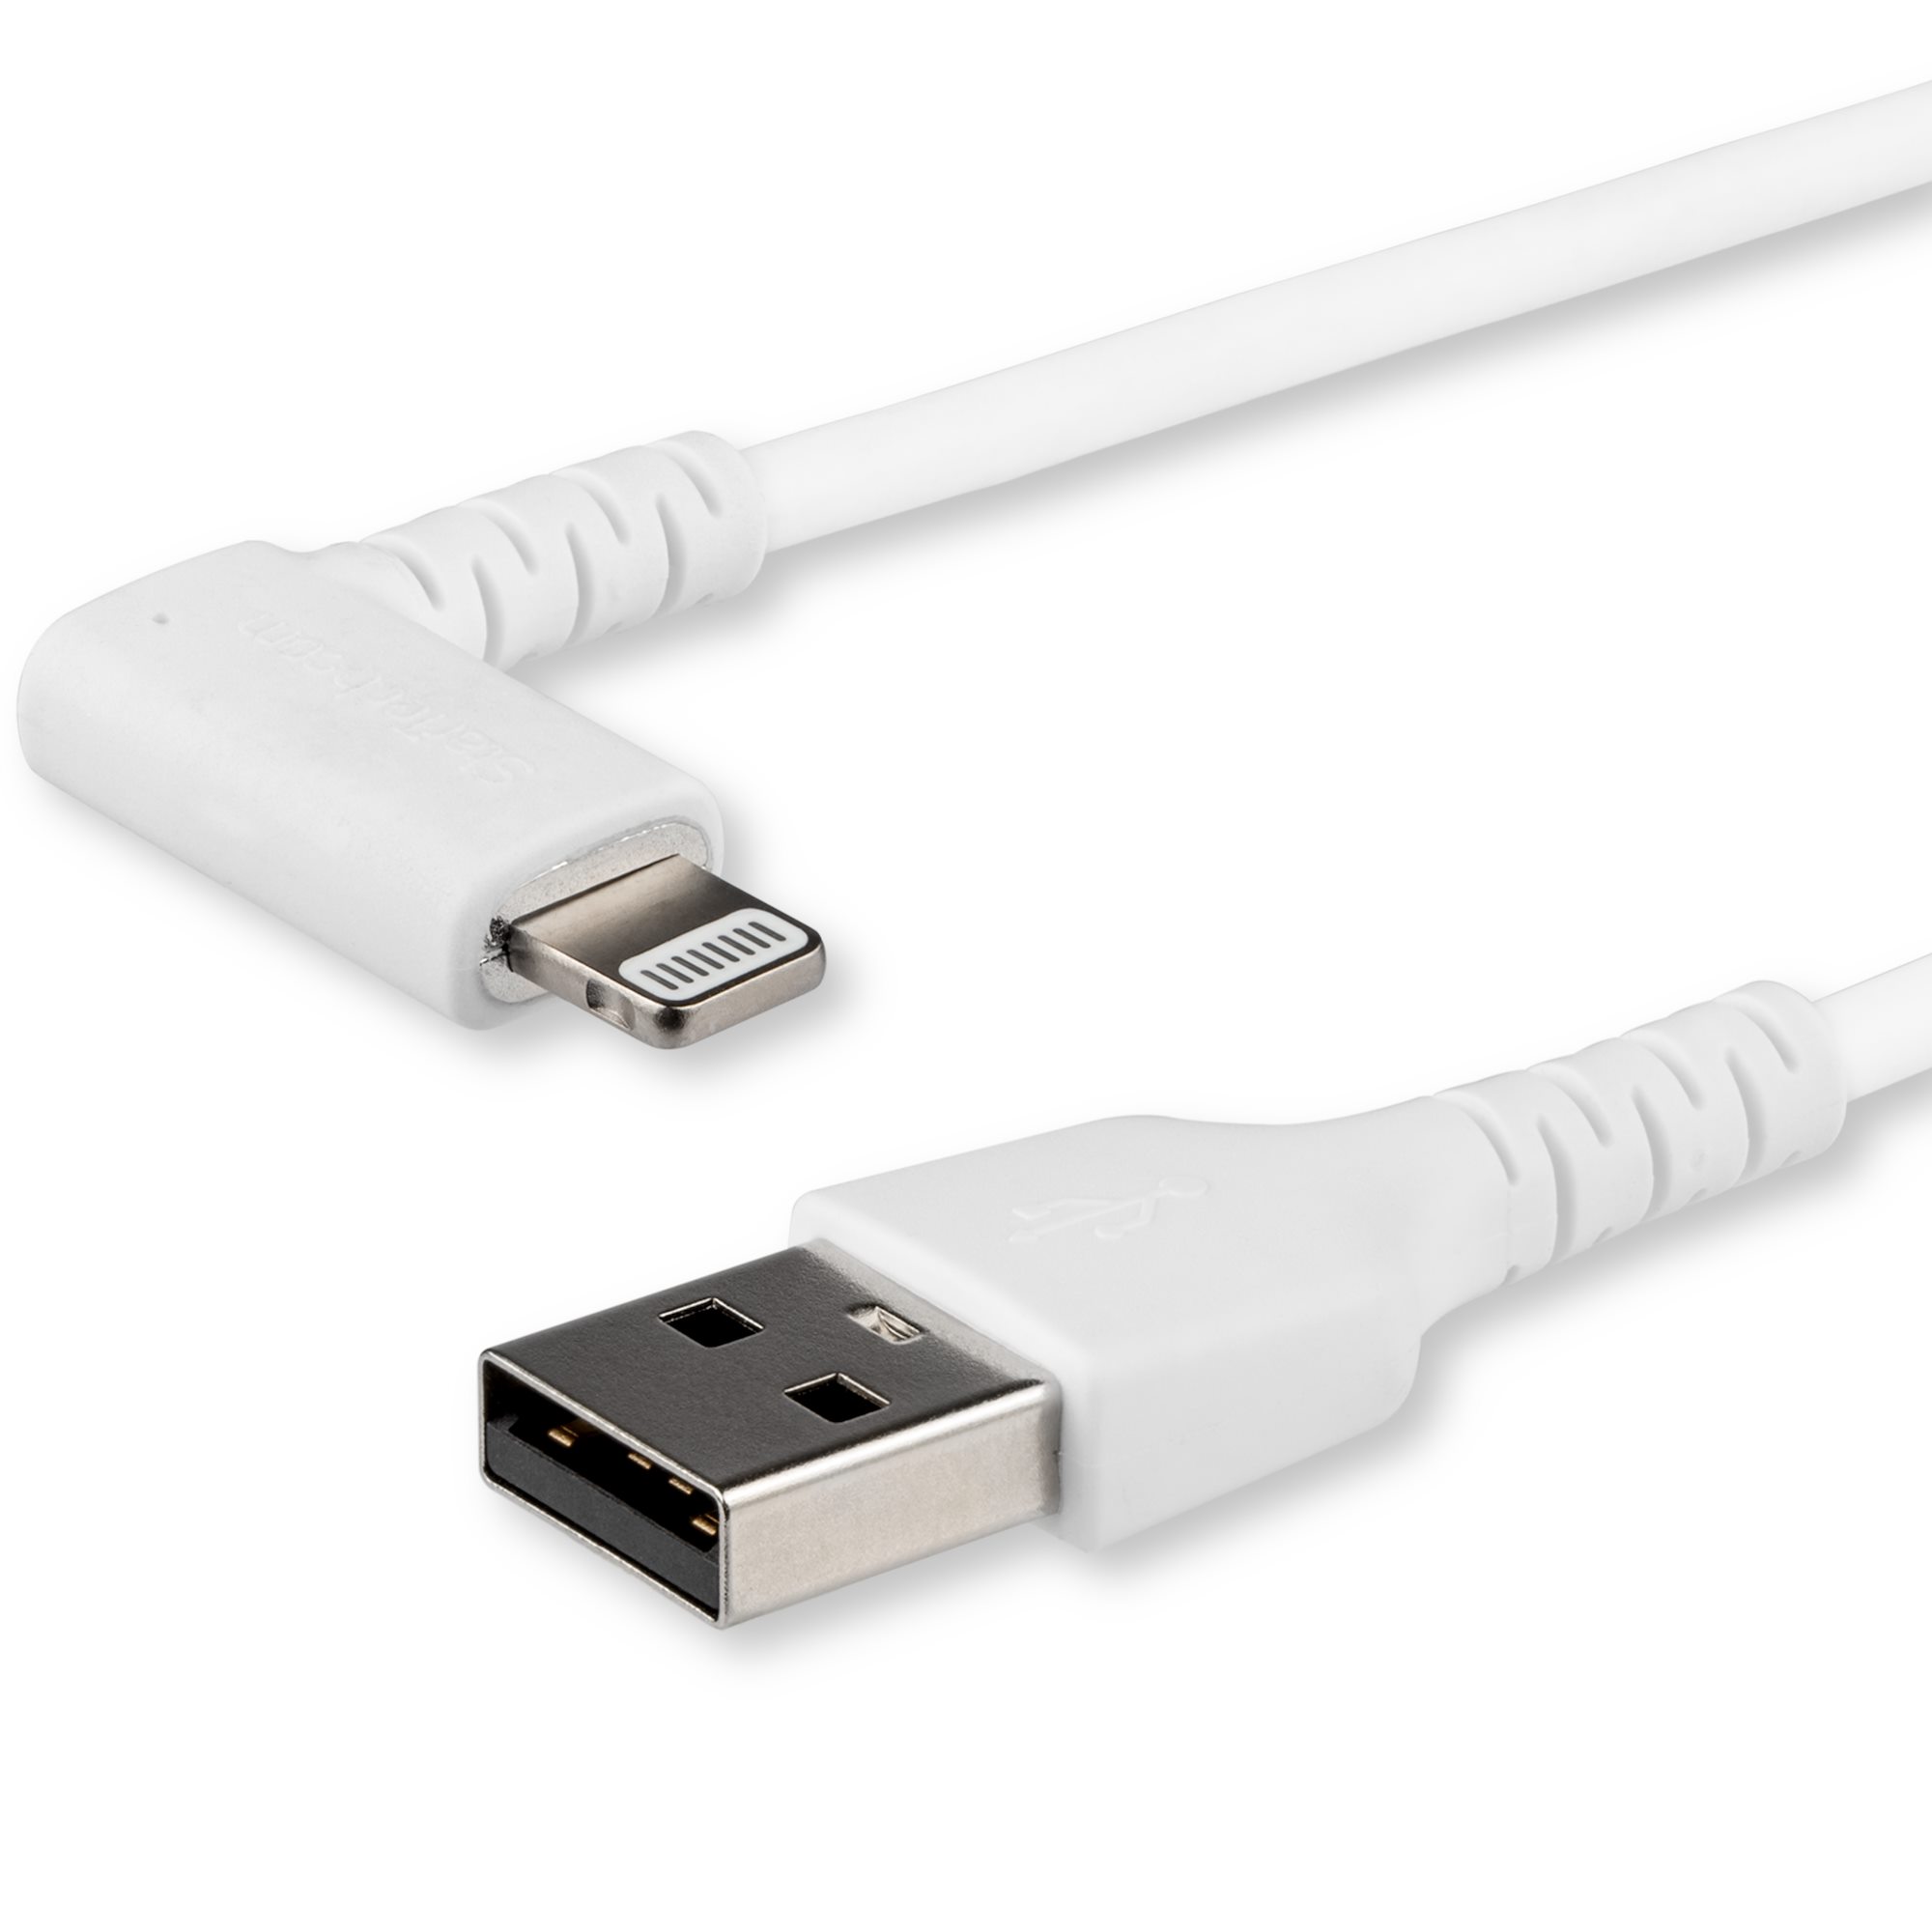 Câble de charge Micro USB A - Apple Lightning MFI